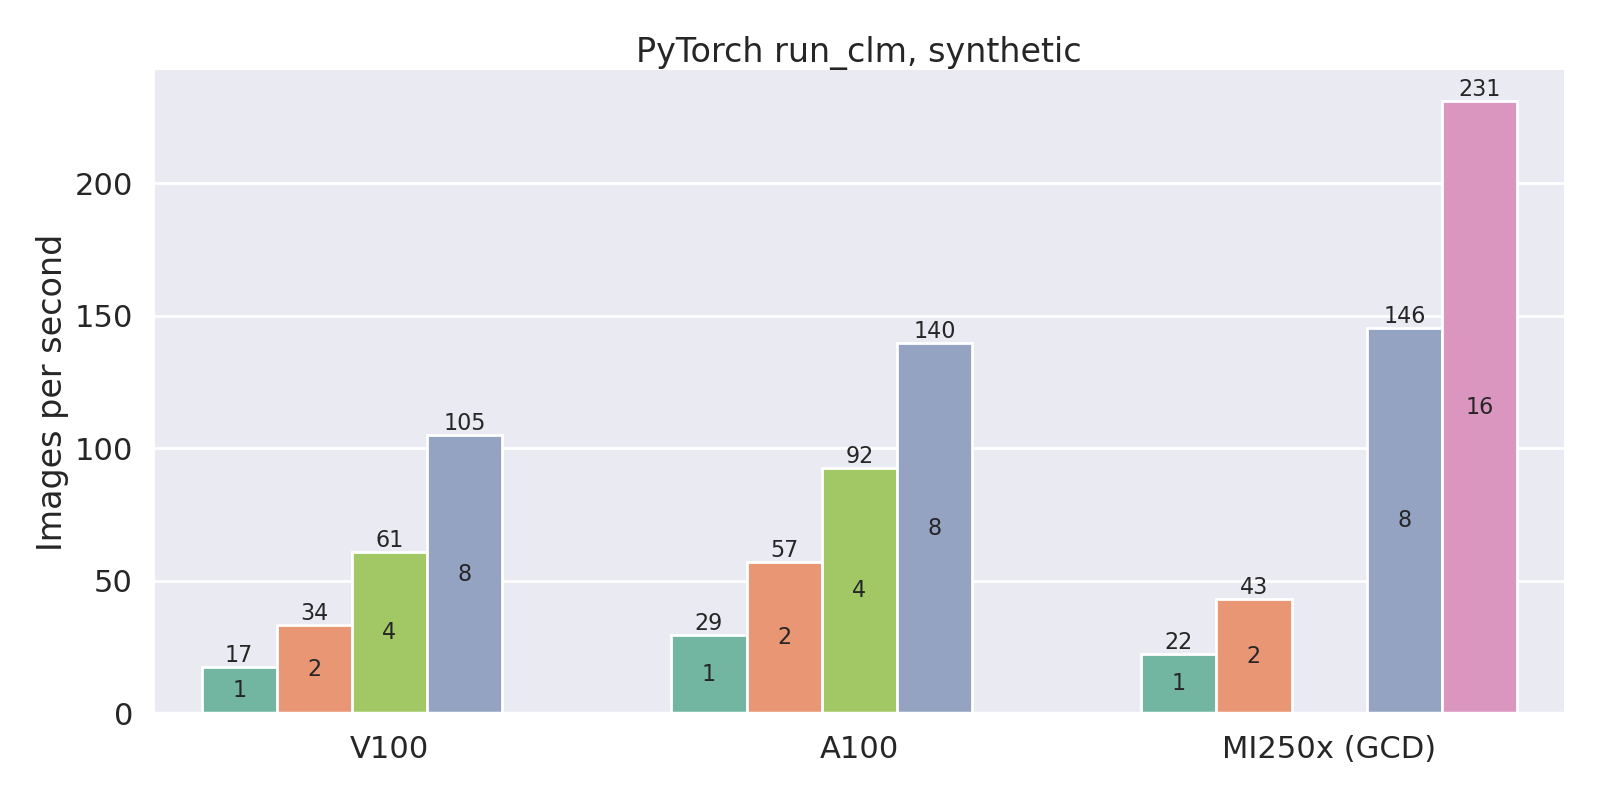 PyTorch run_clm results chart